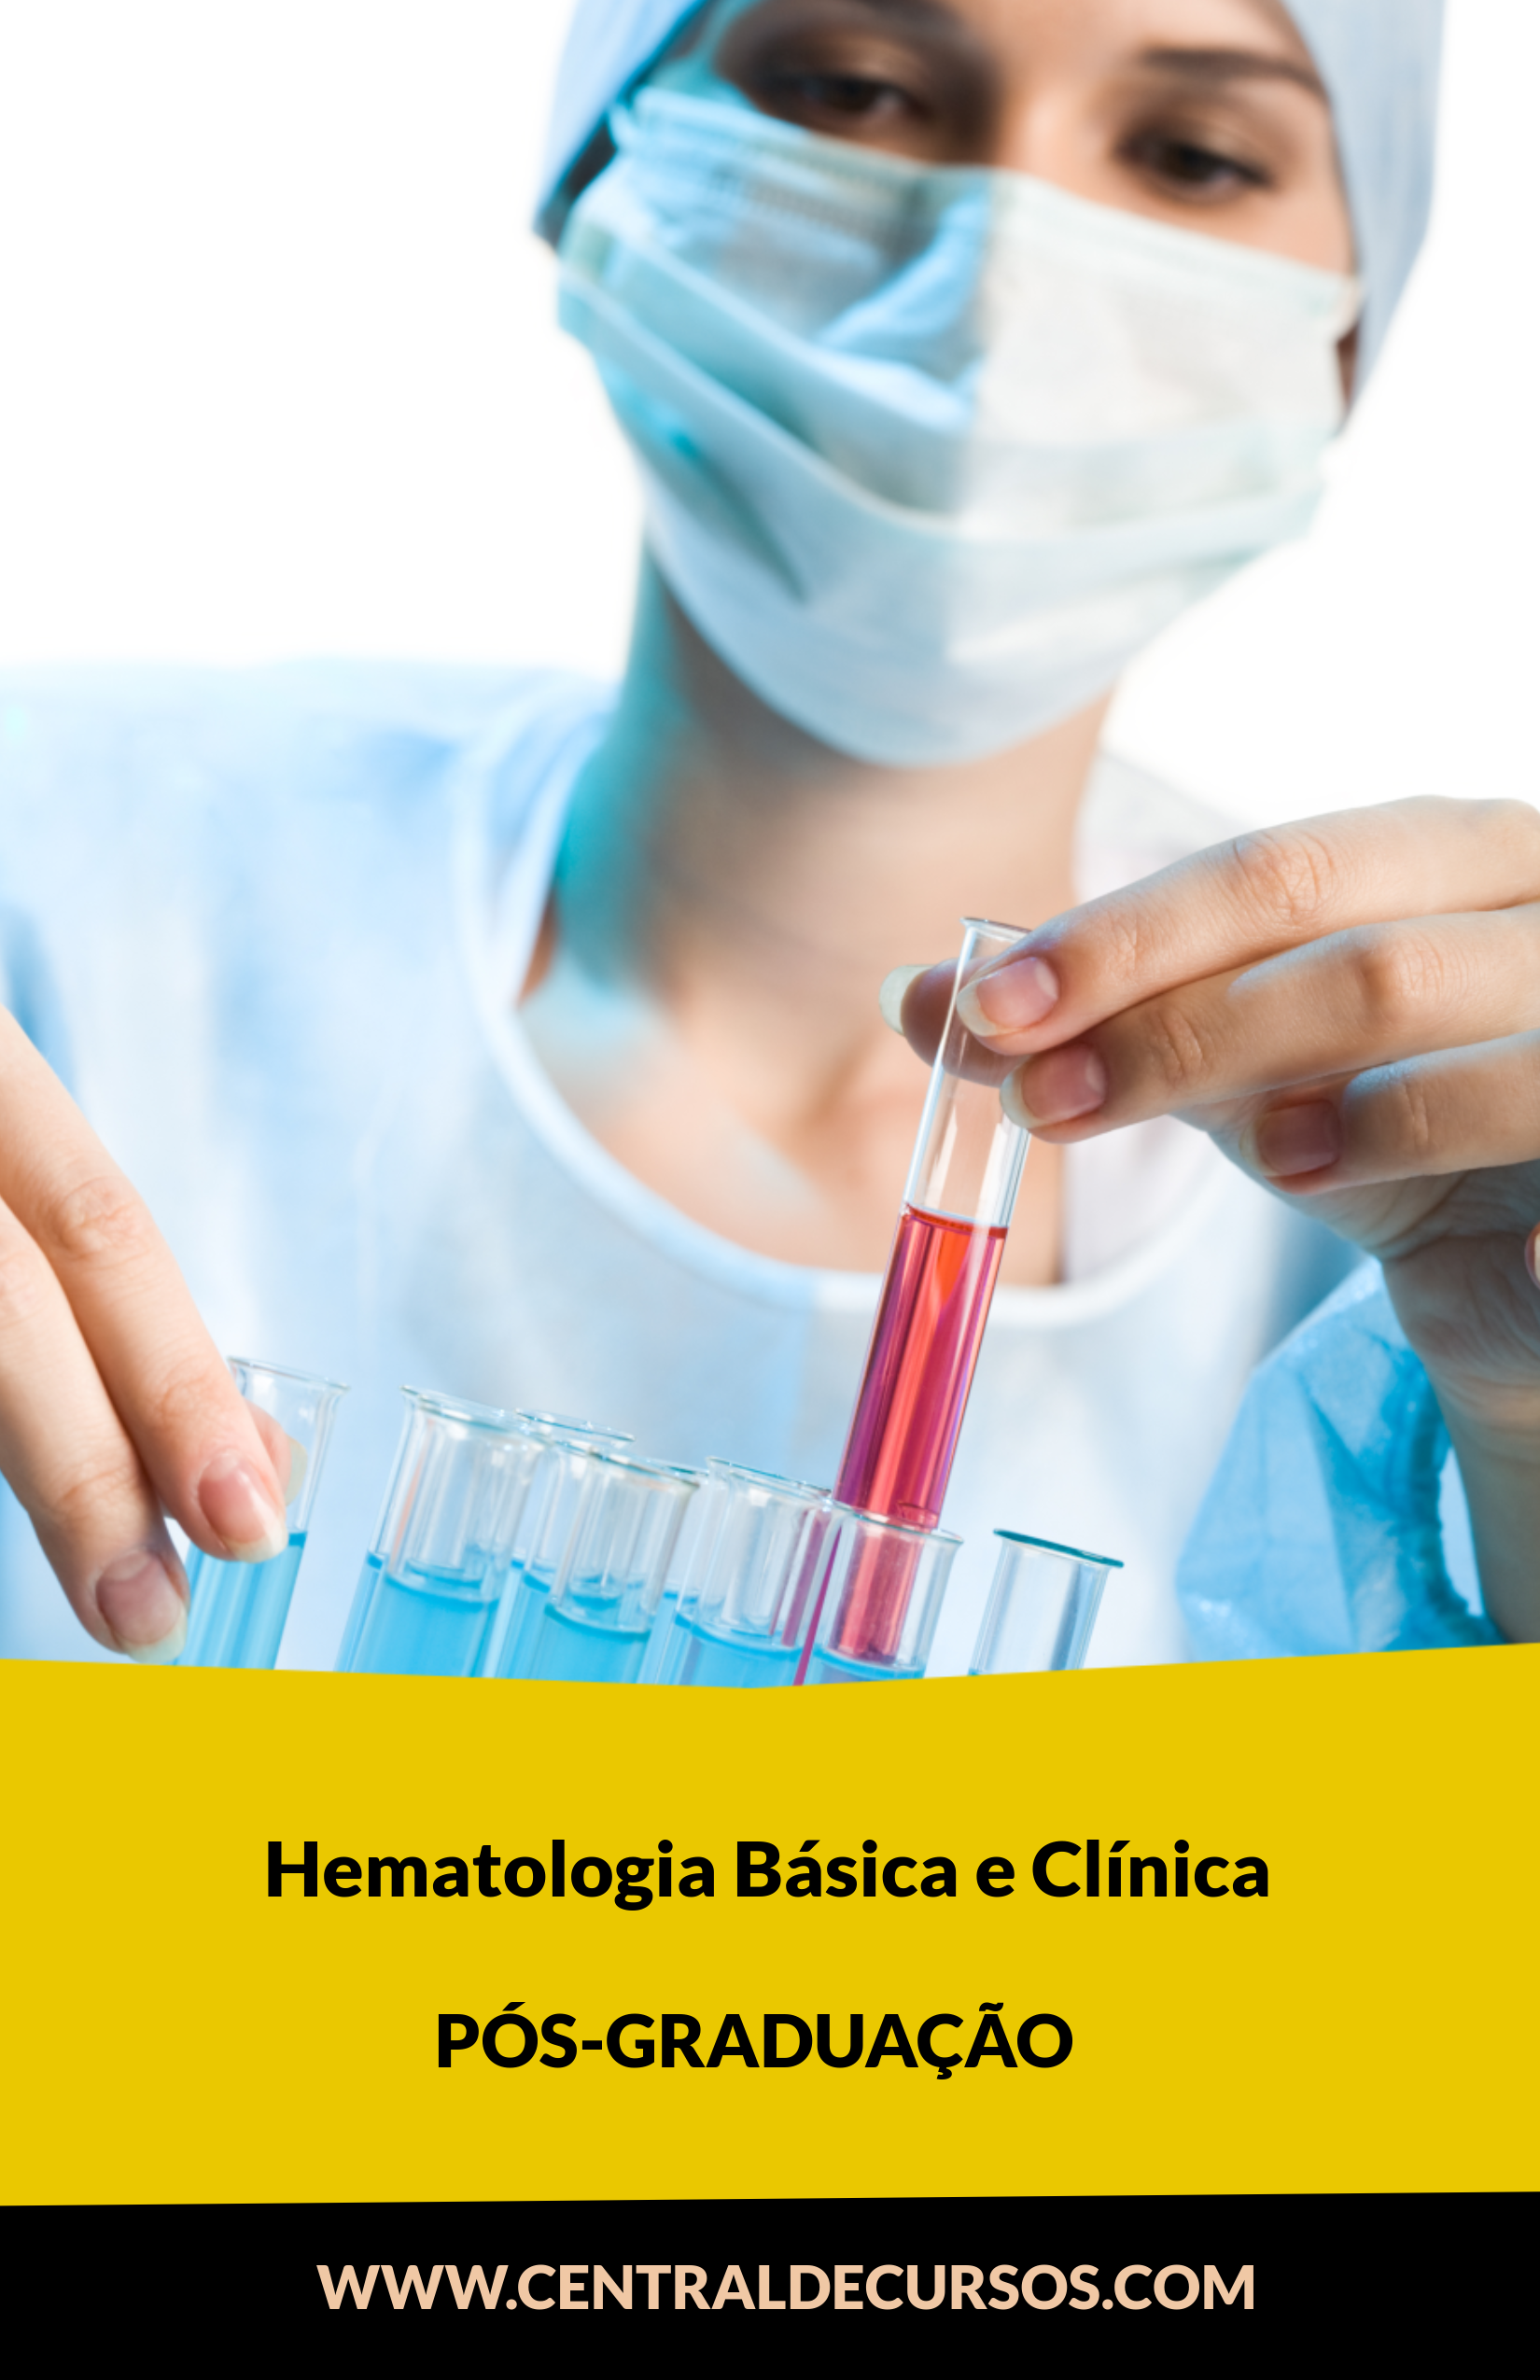  Hematologia Básica E Clínica